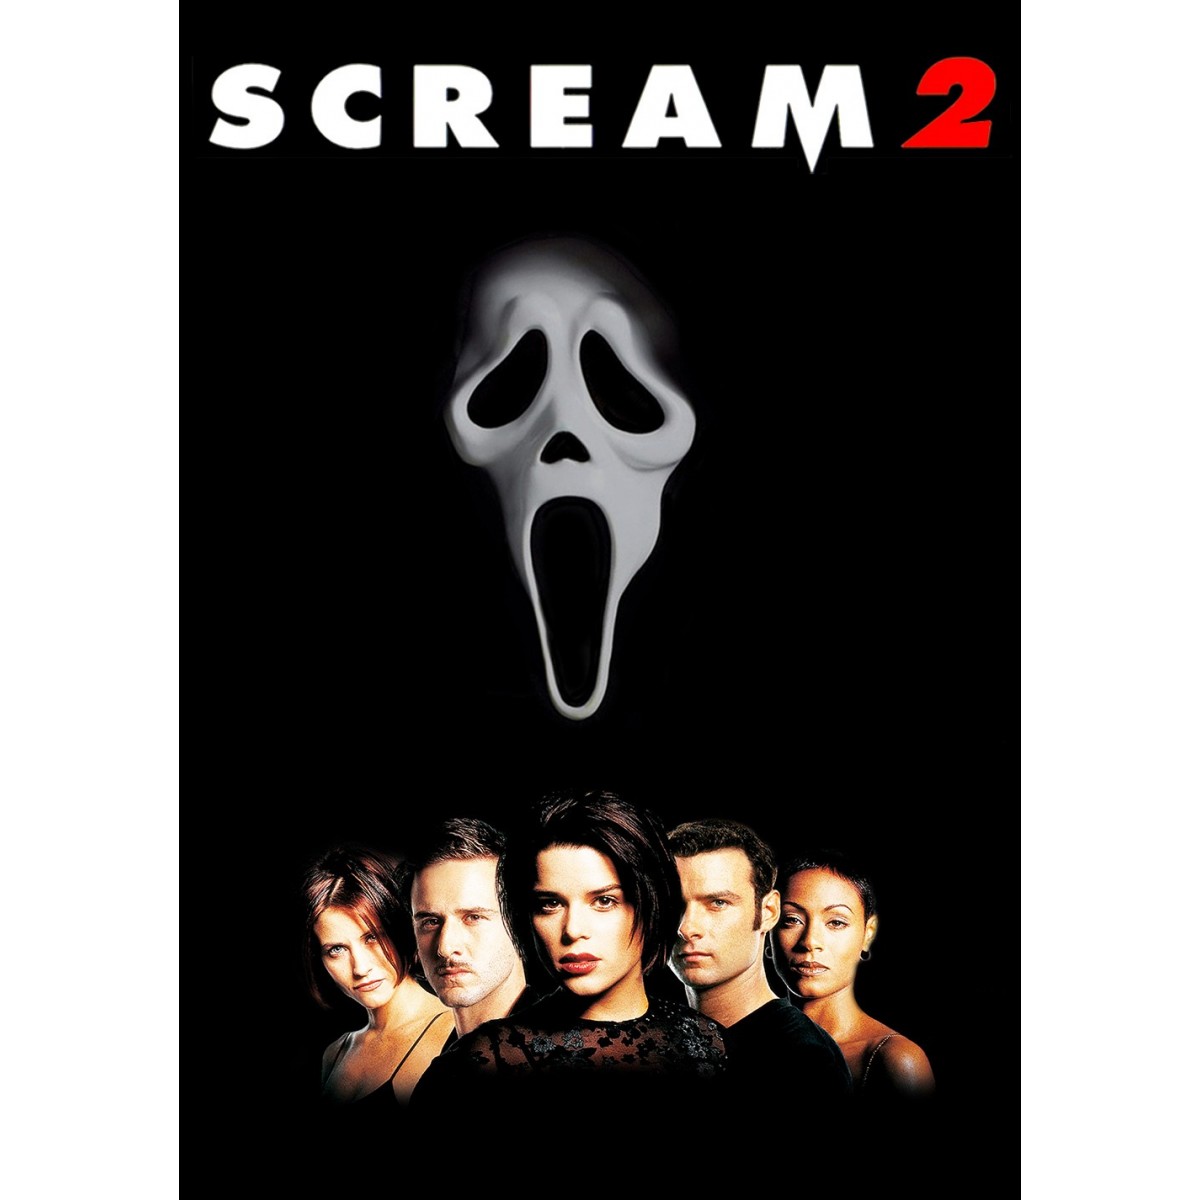 Photo Scream 2